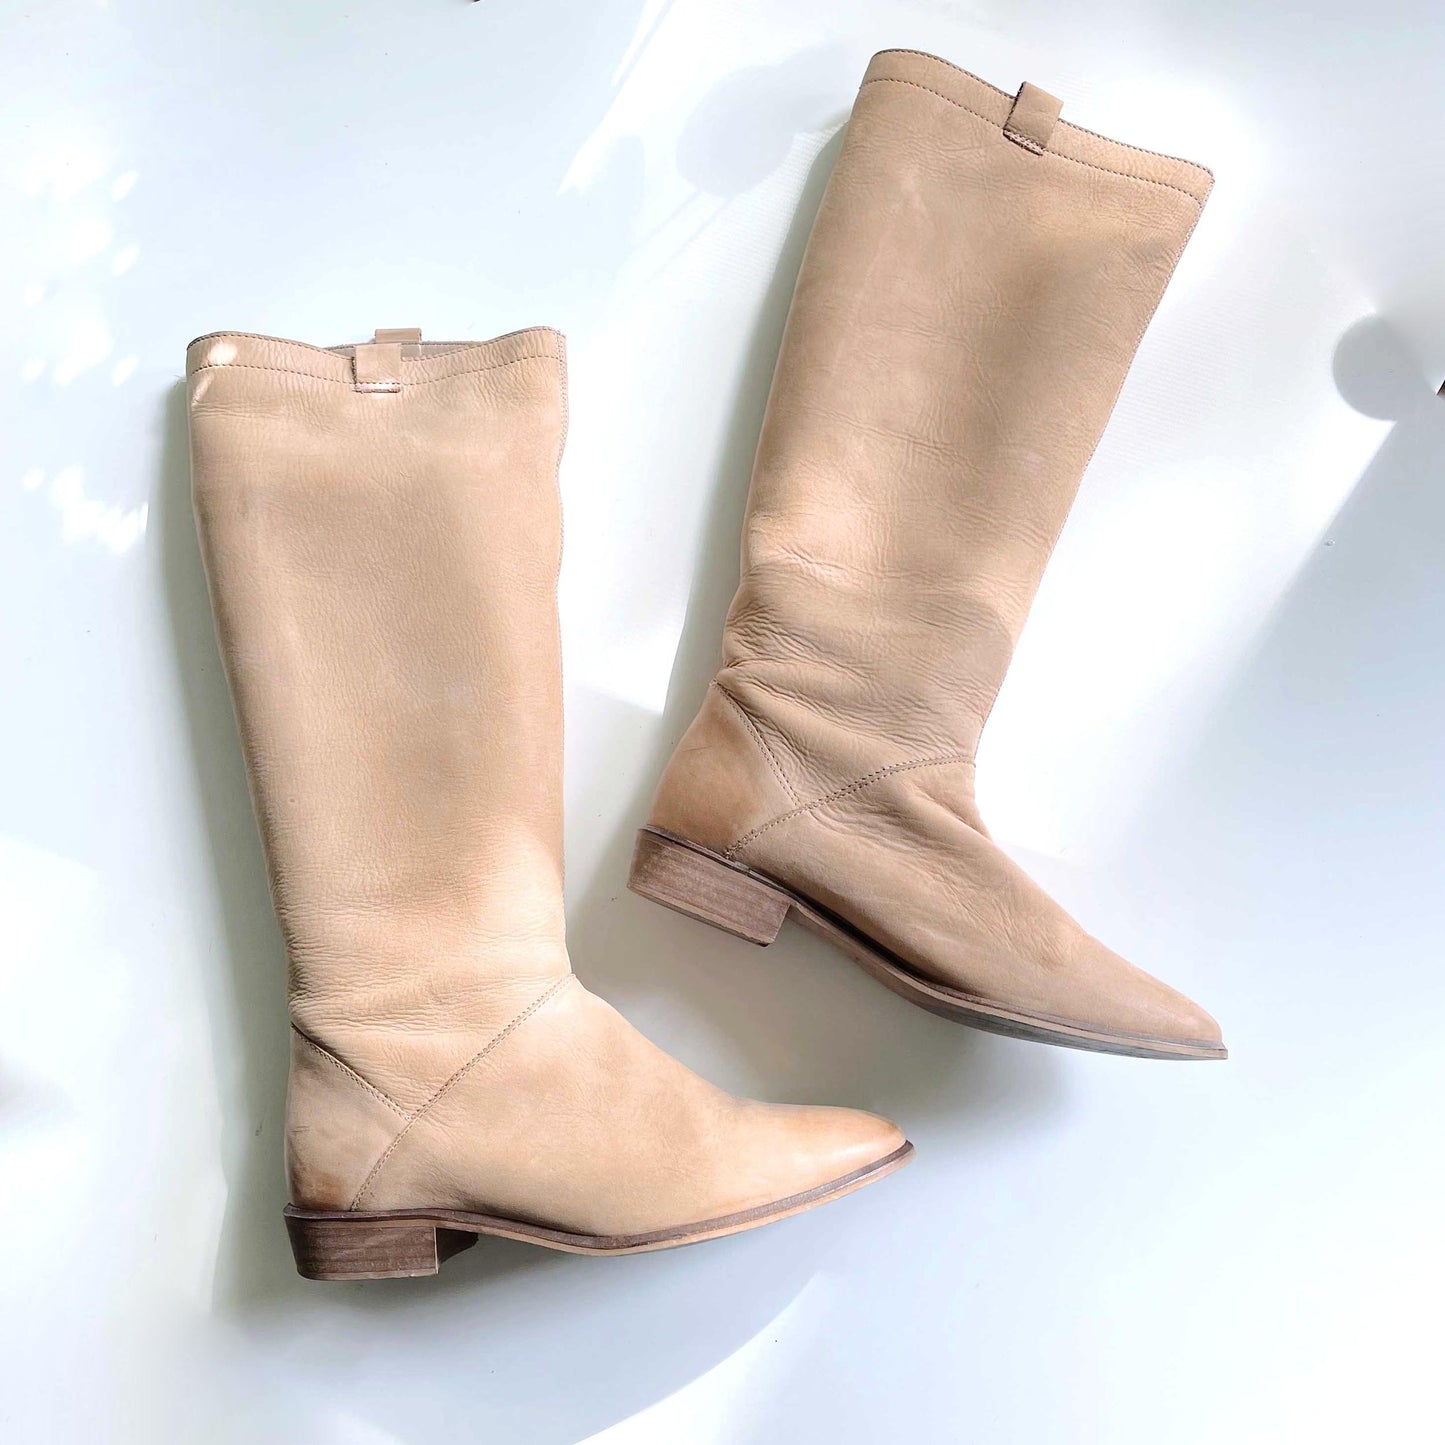 zara tall natural leather durango boots - size 39